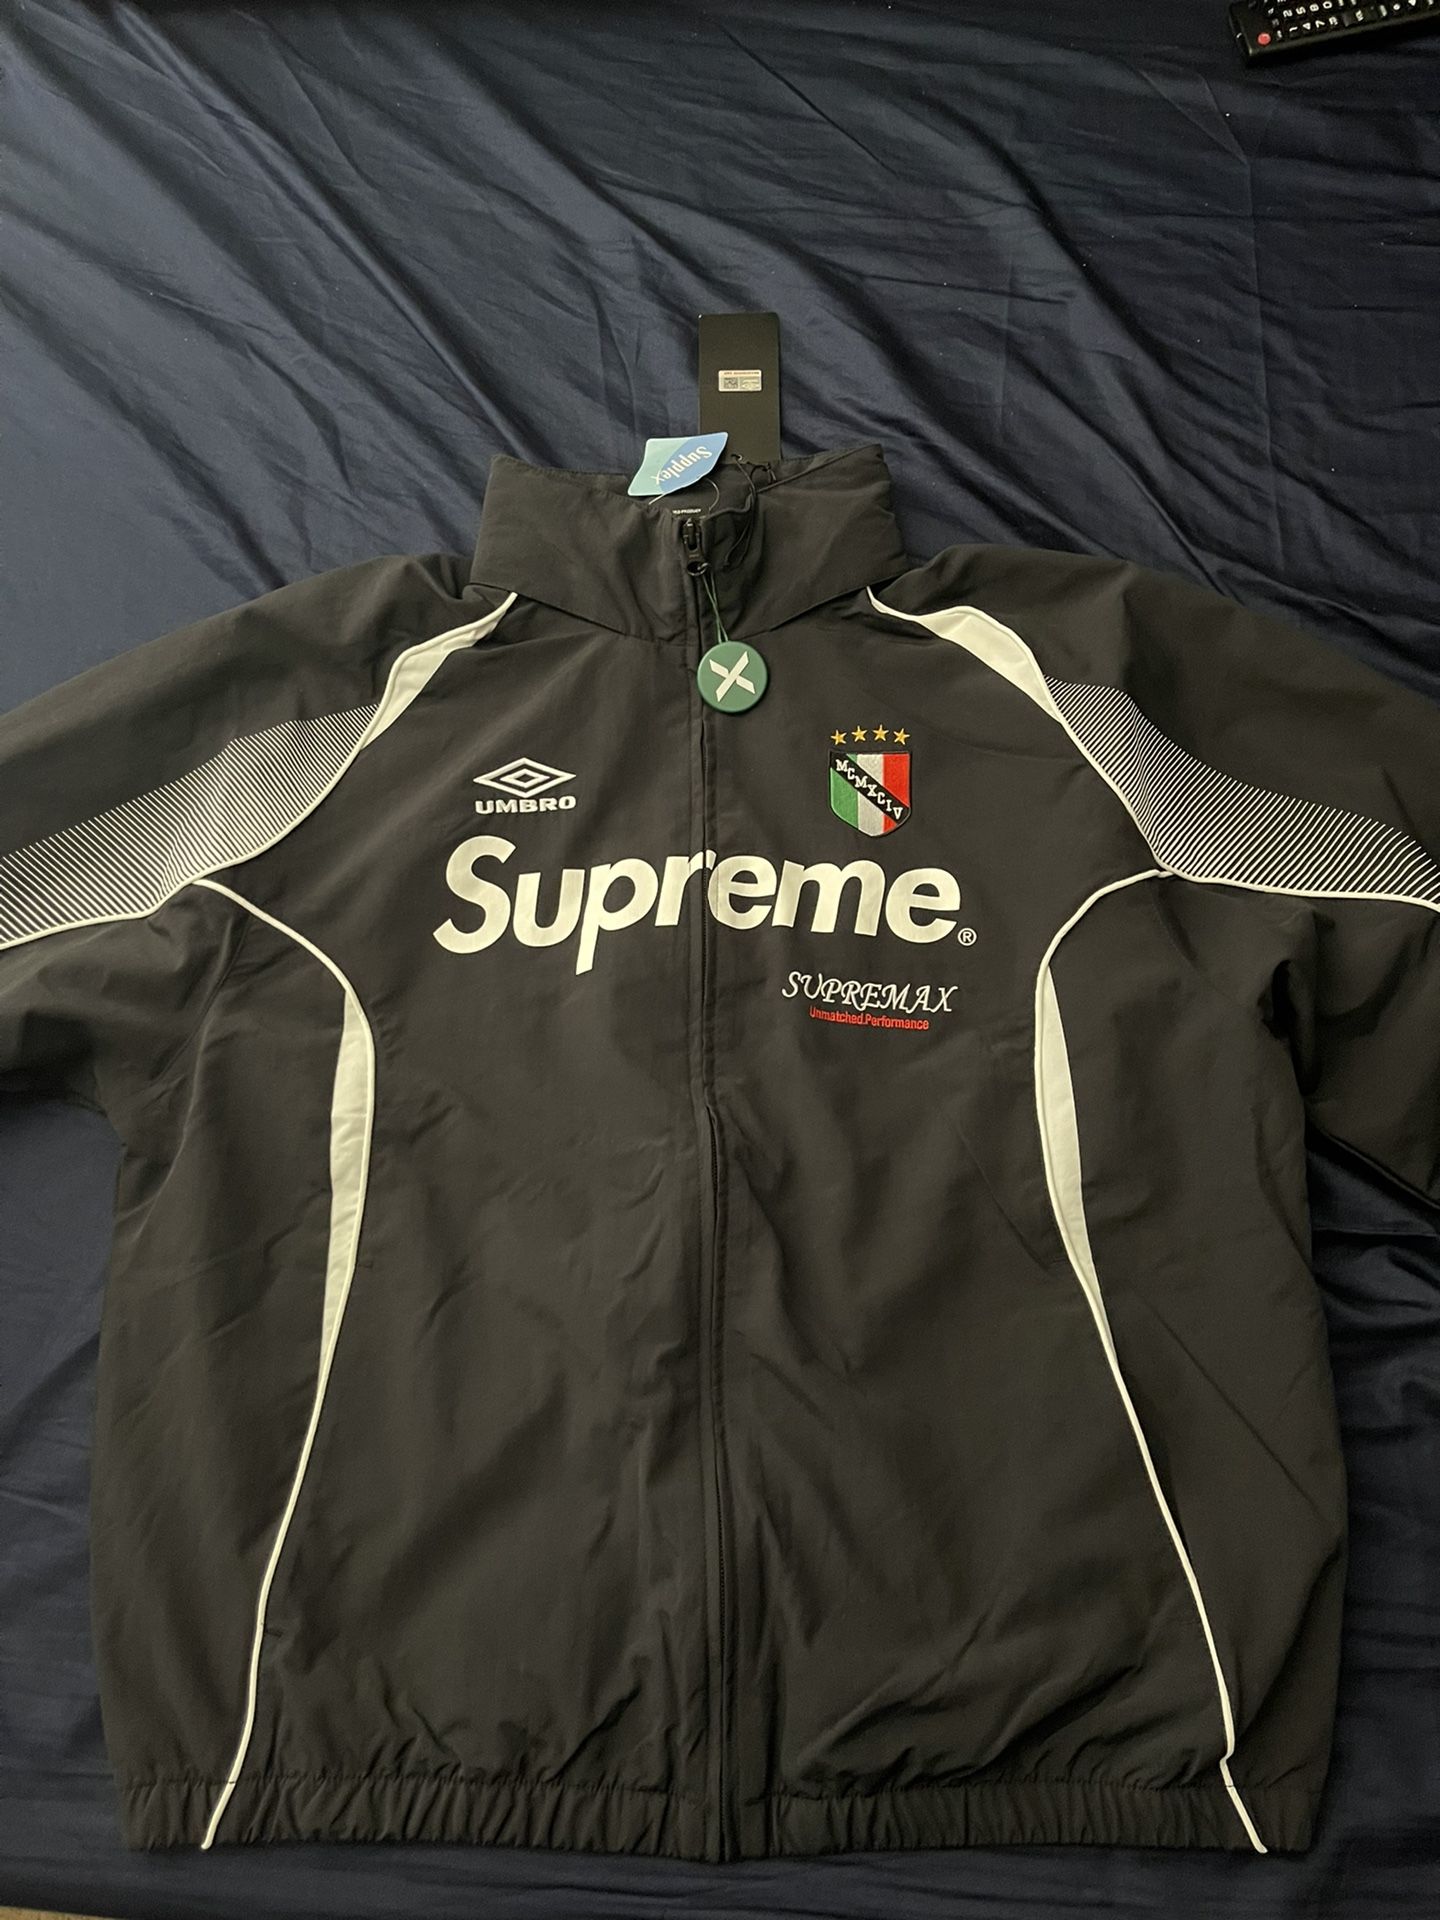 selling supreme x umbro track jacket (new)